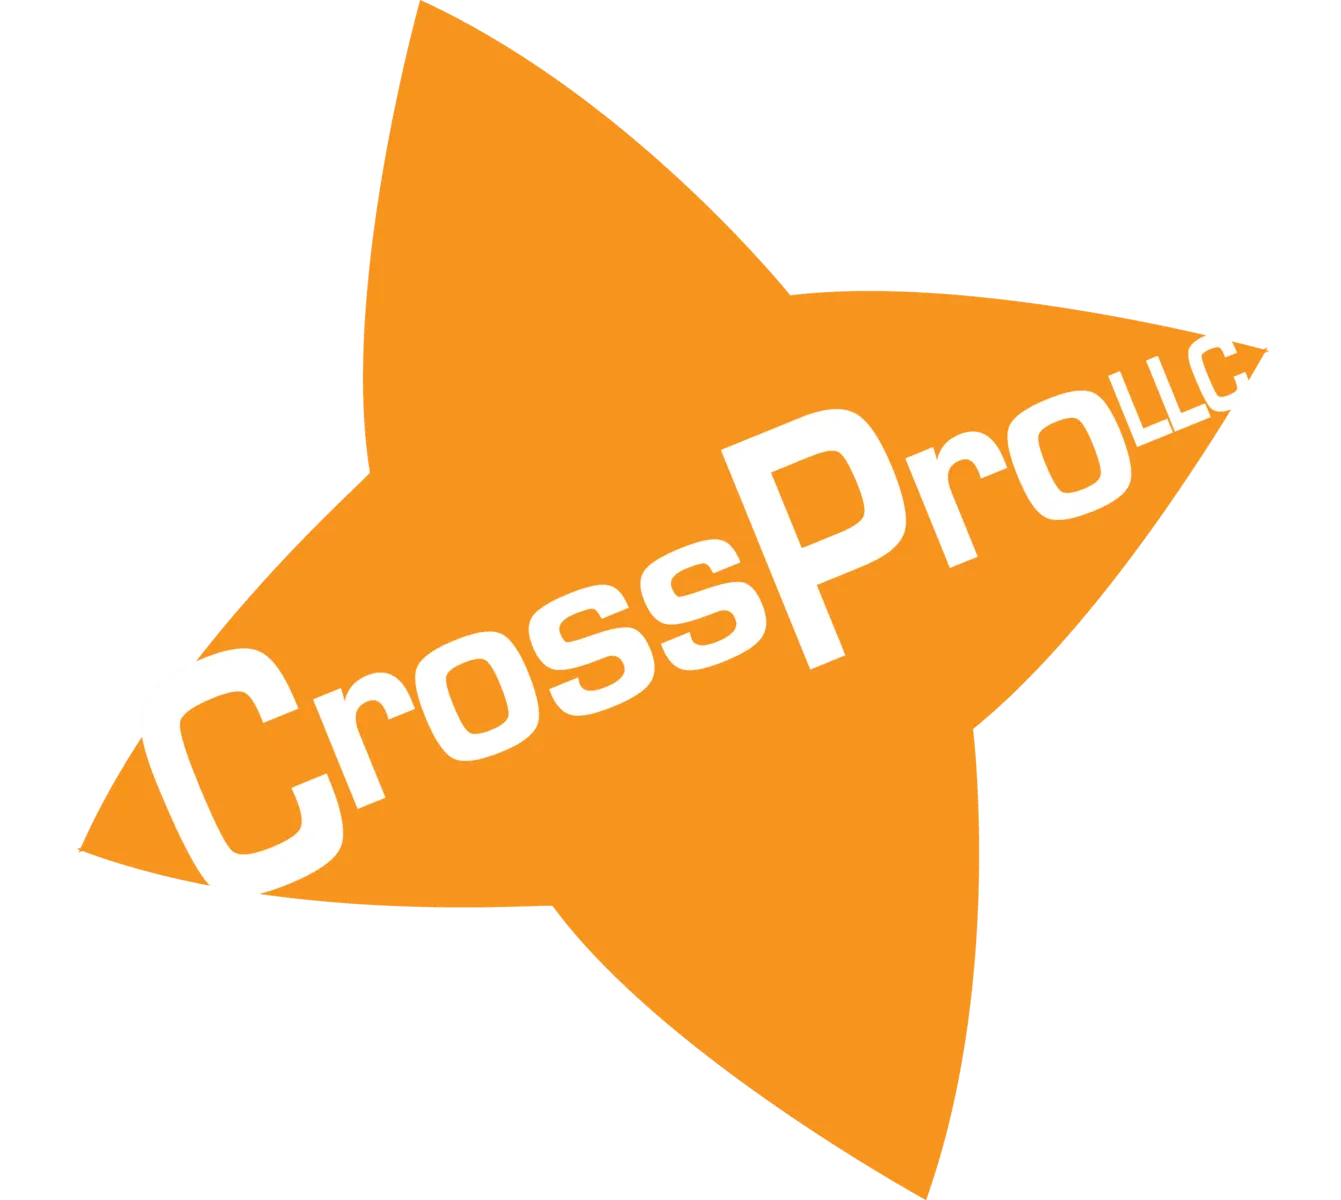 crossprollc.com